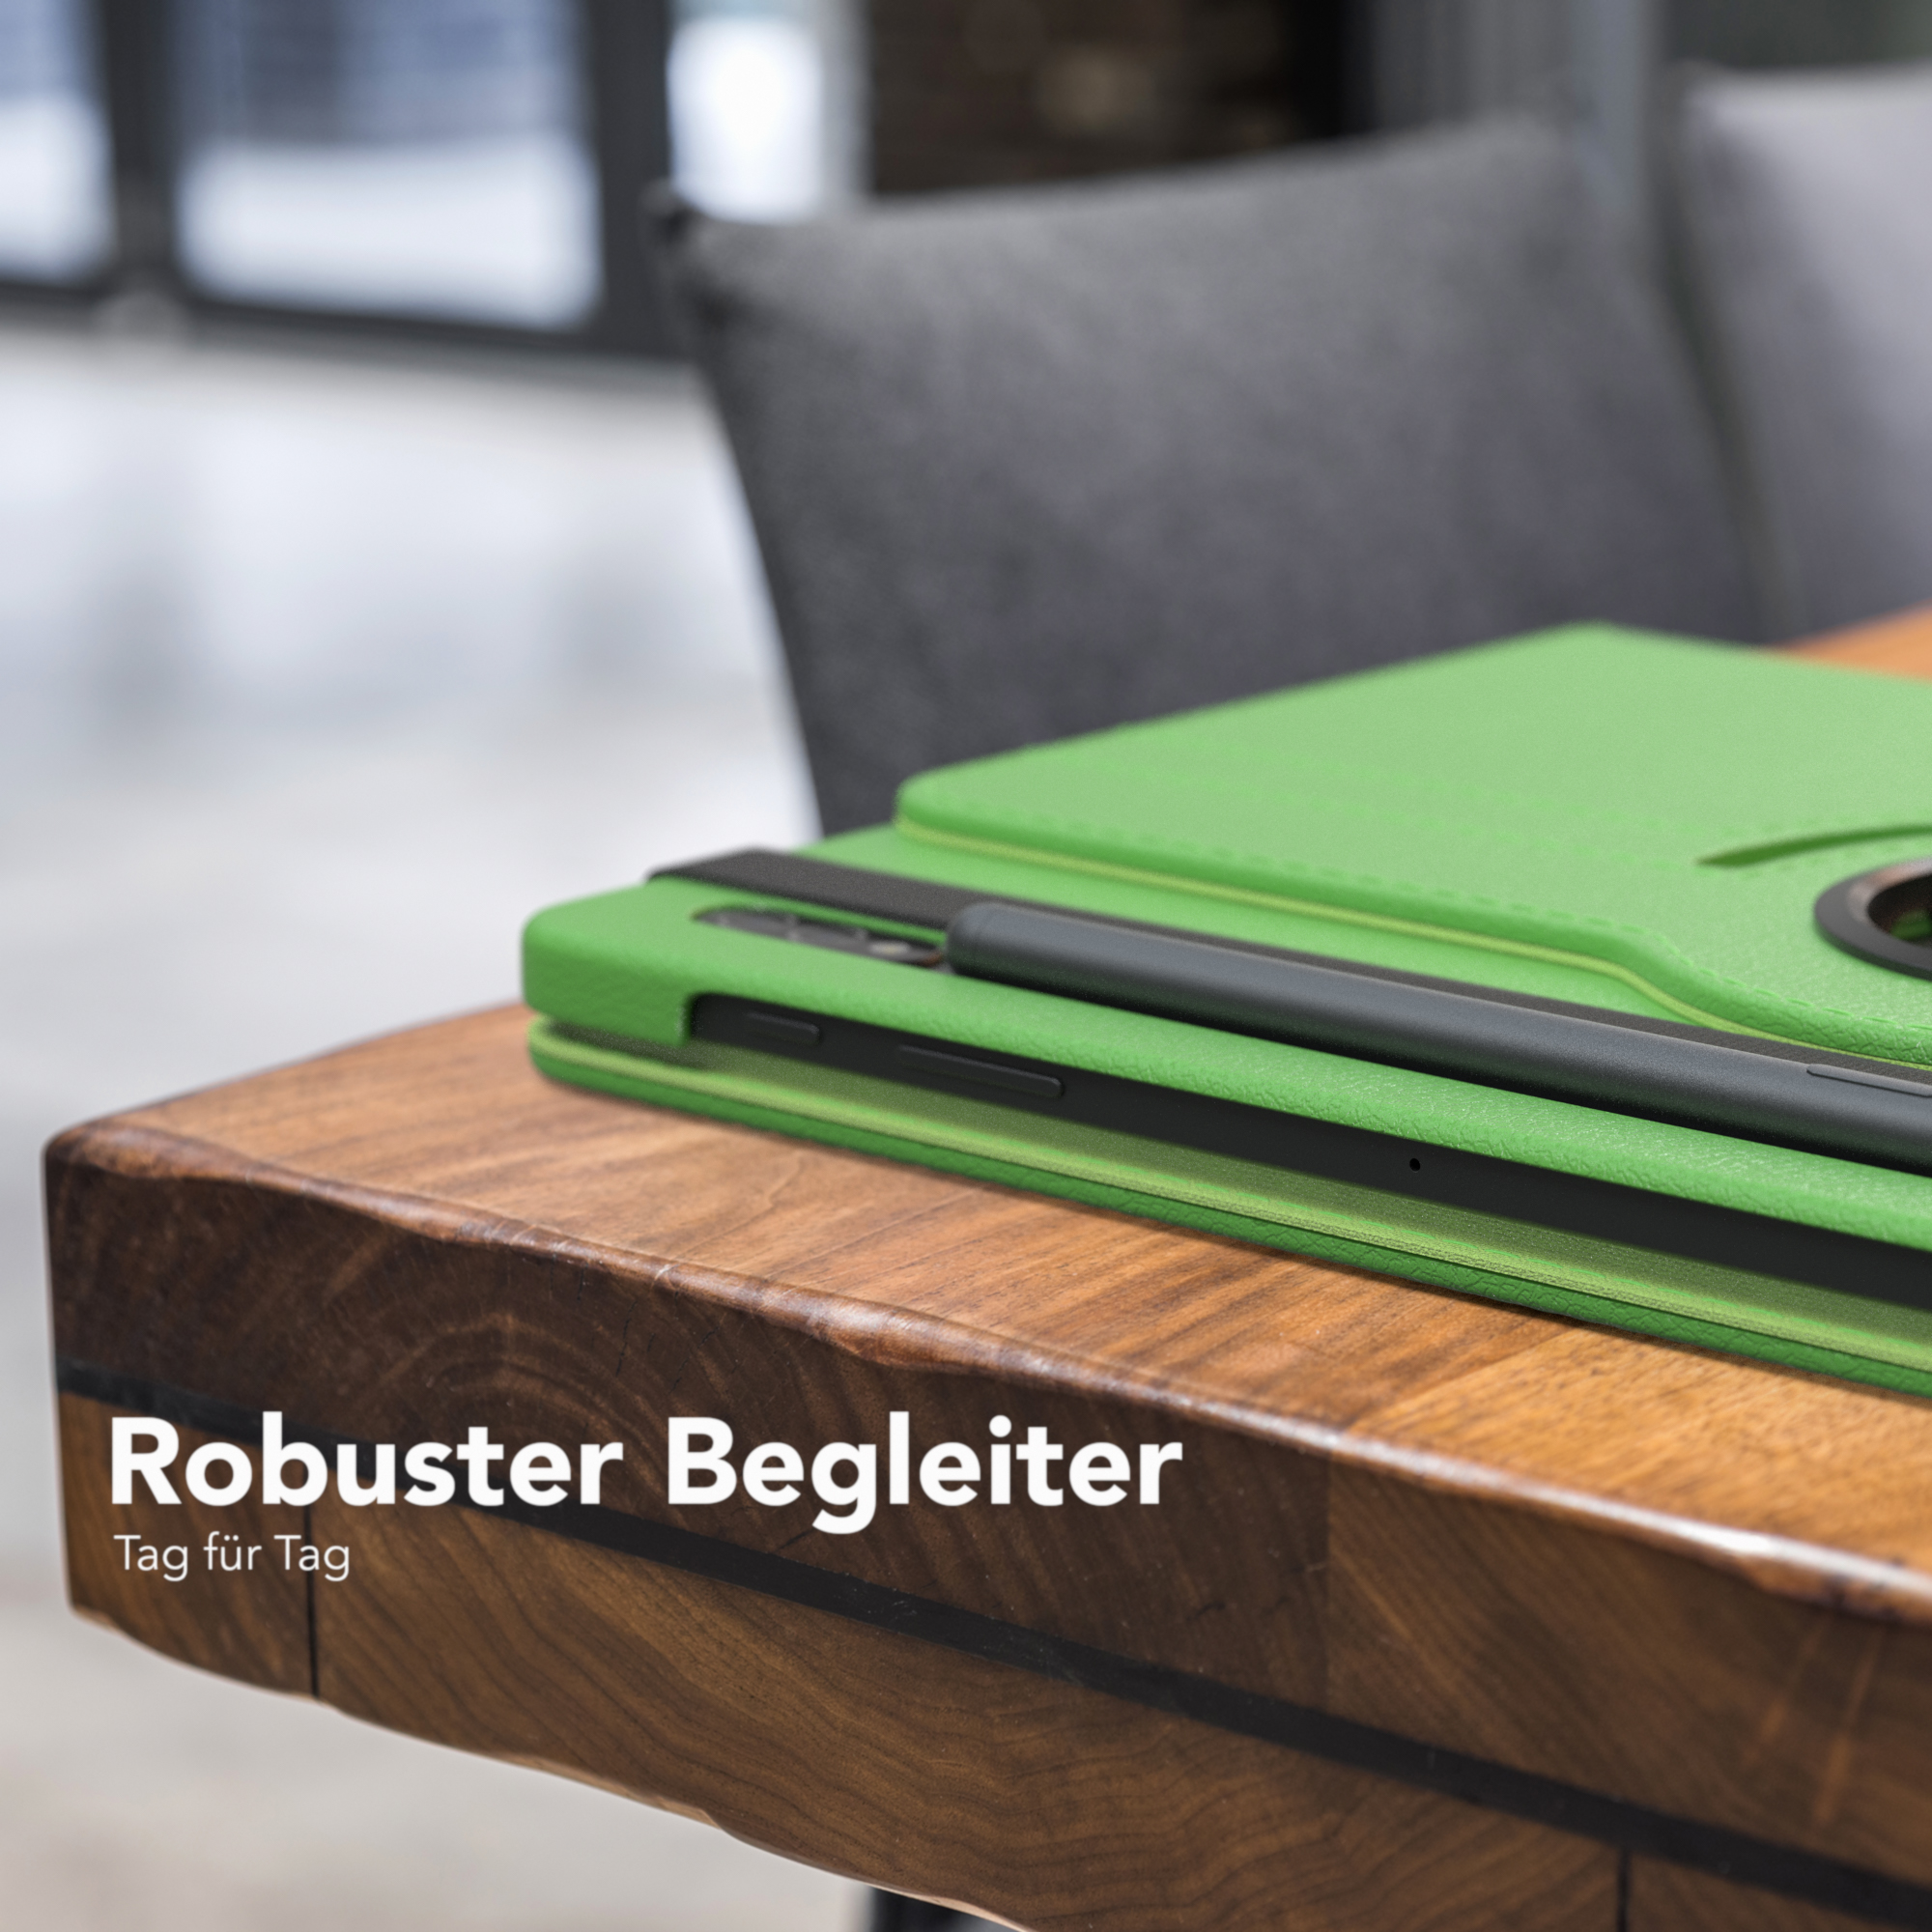 CASE EAZY S8 Kunstleder, Galaxy Rotationcase Tab Schutzhülle für Grün Tablethülle Samsung 11.0\